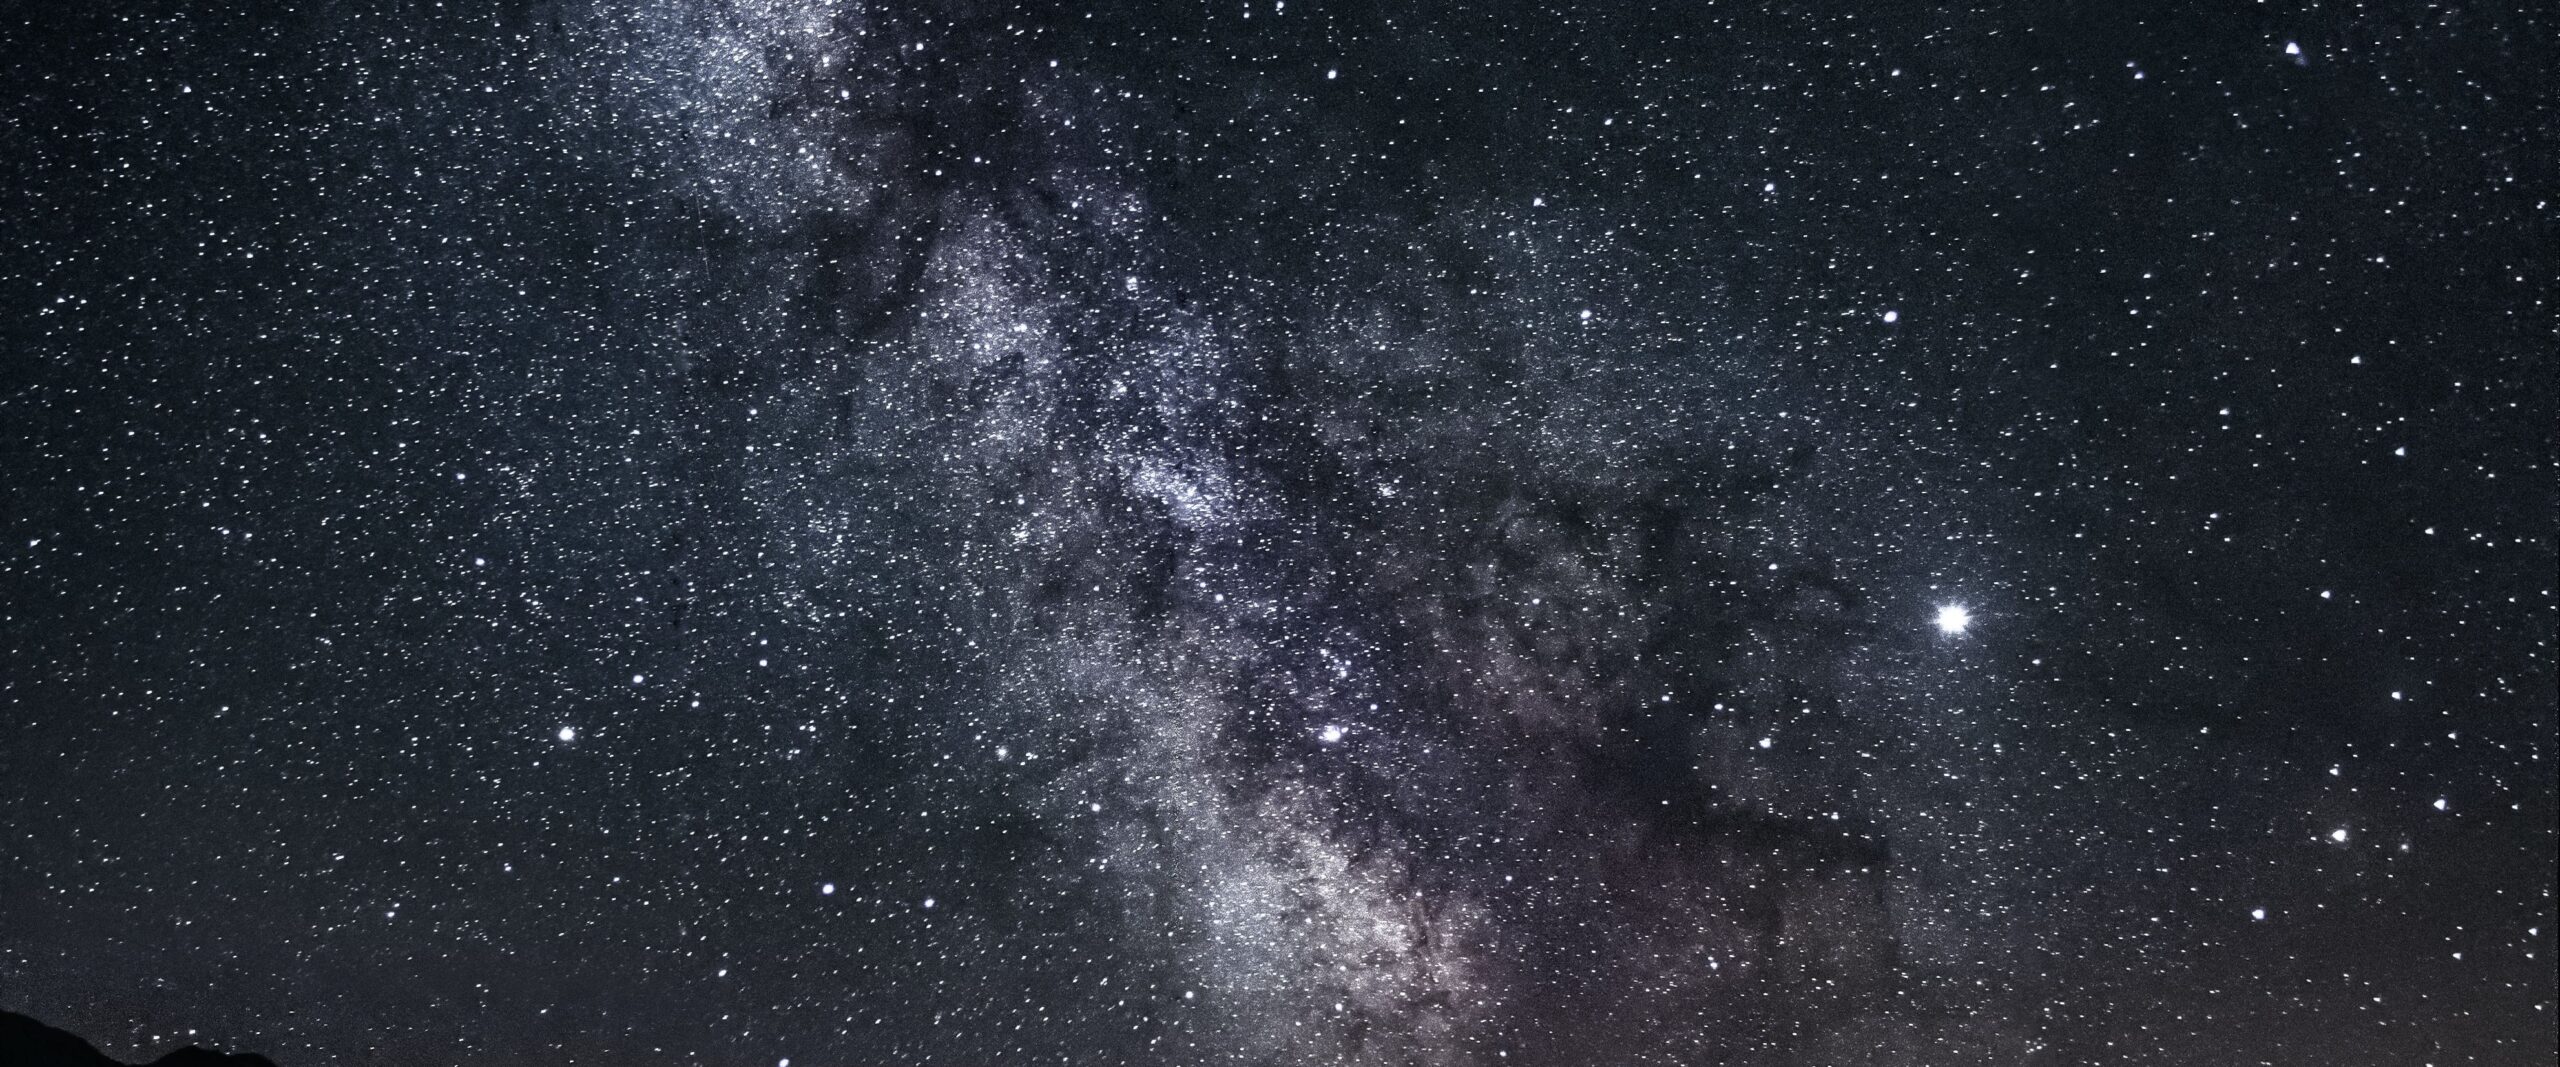 Sternenbildfotografie im Nachthimmel | C-Rope Kamerazubehör Blog